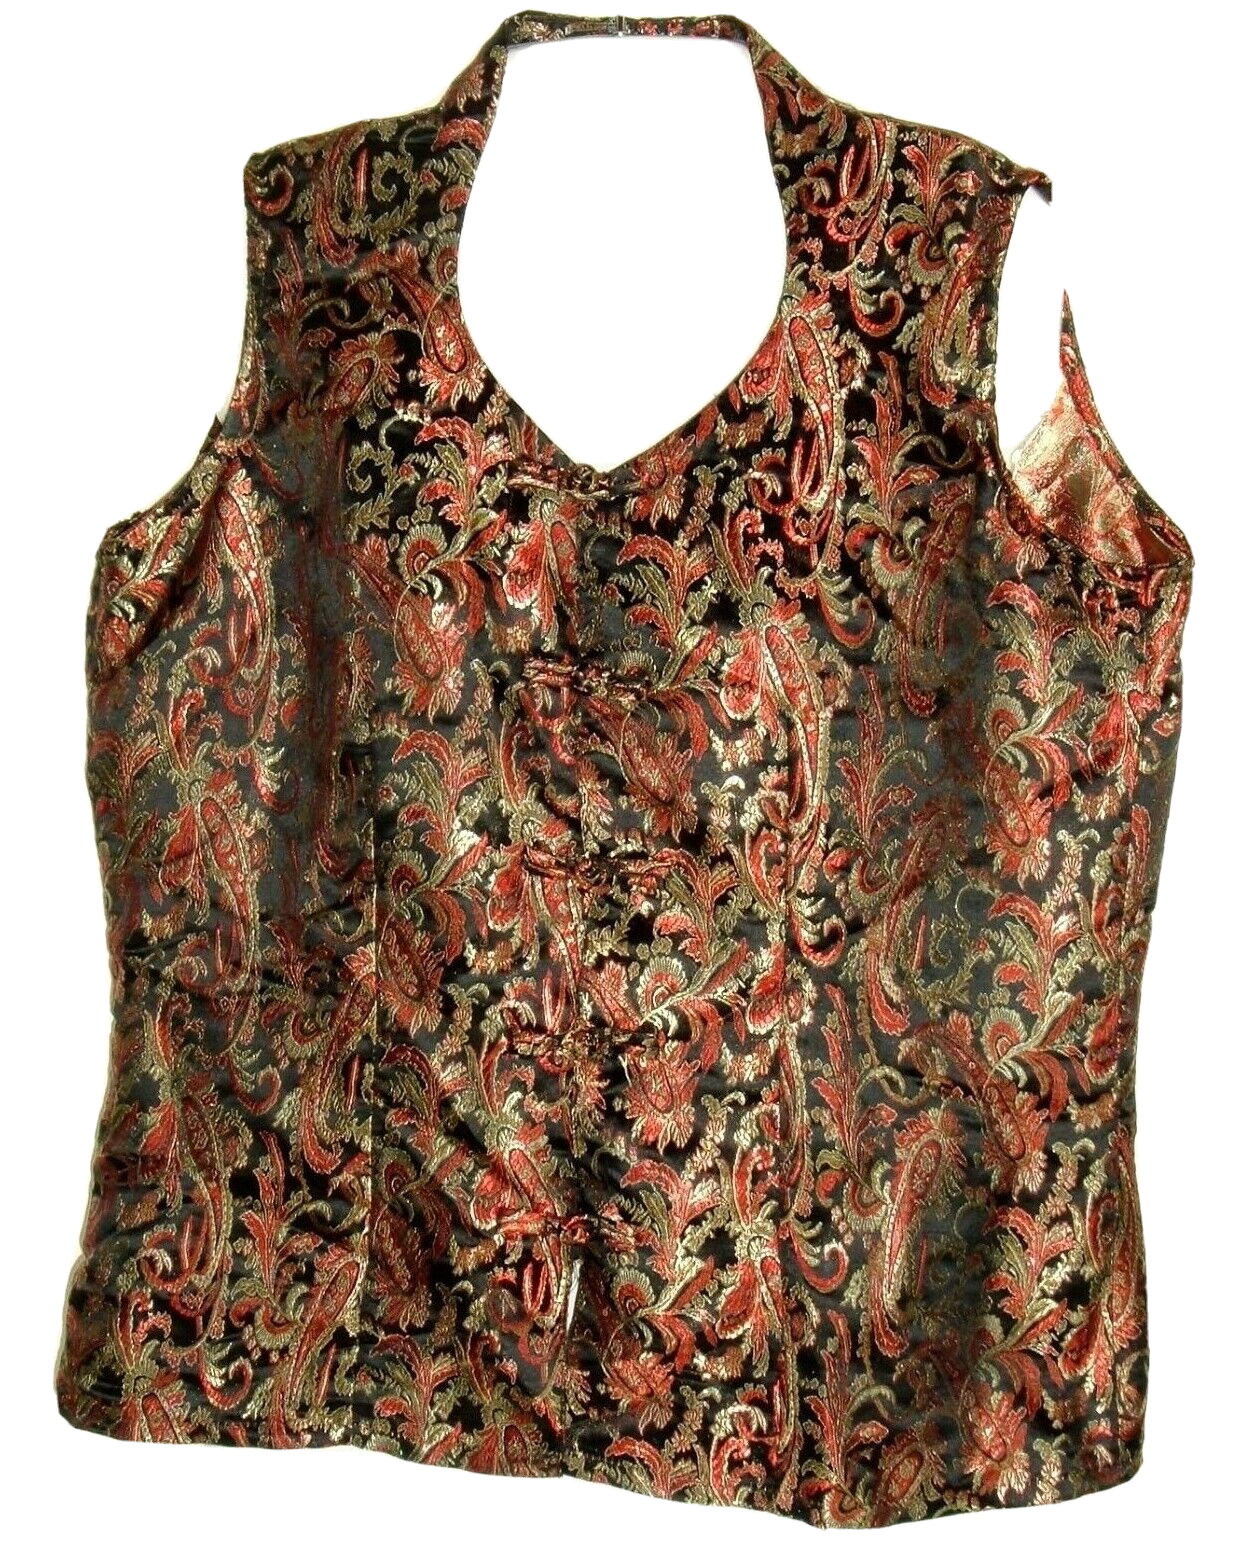 Primary image for Vintage Vest OM Gallery XL Sleeveless Top Silk Blend Asian Paisley Boho festival